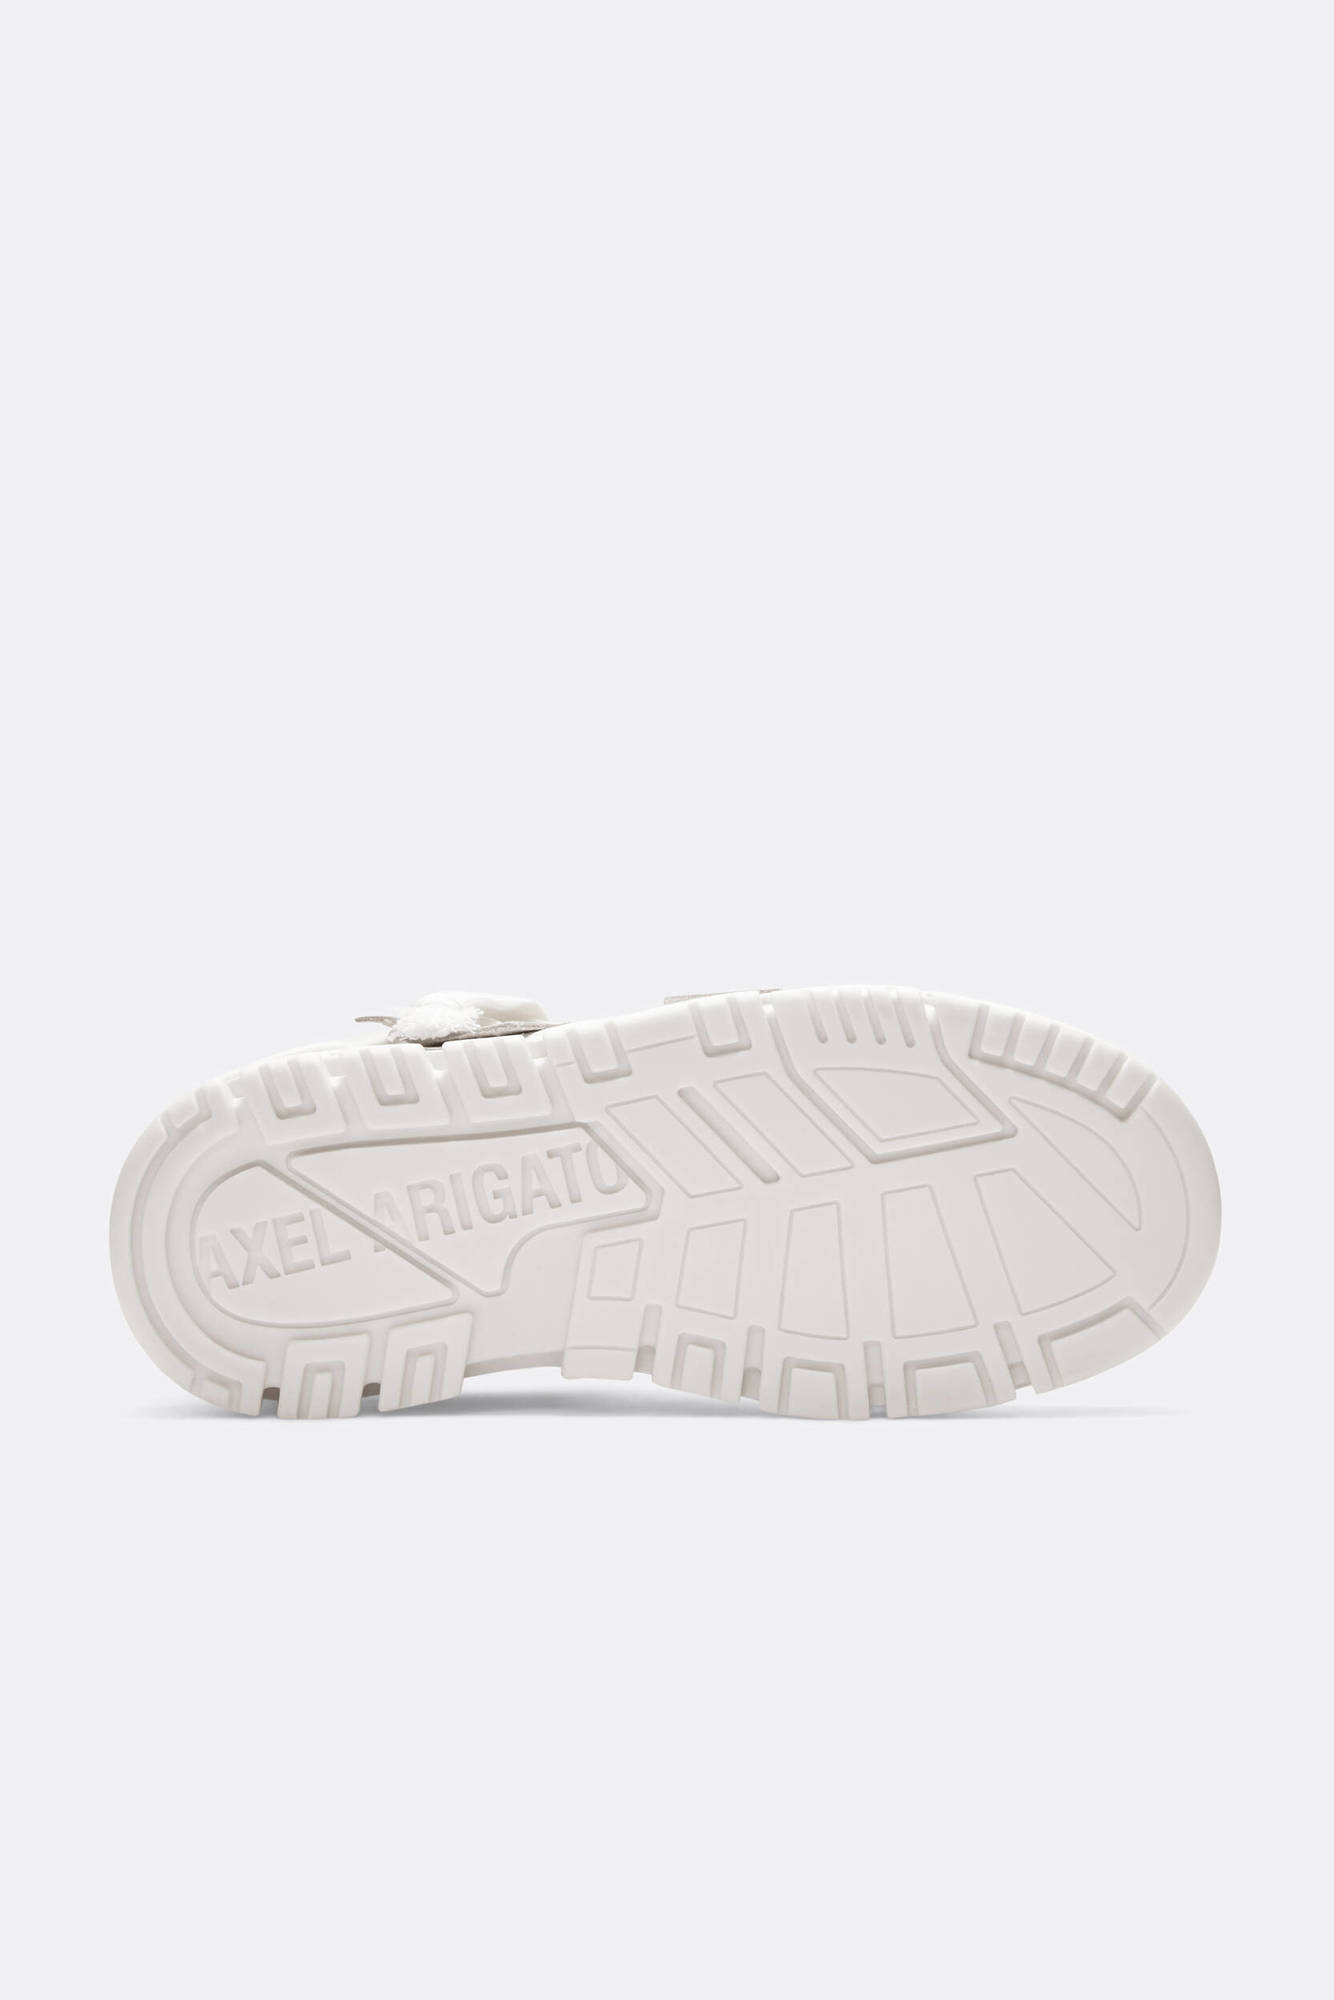 AXEL ARIGATO Area Patchwork Sneaker in White/White 42